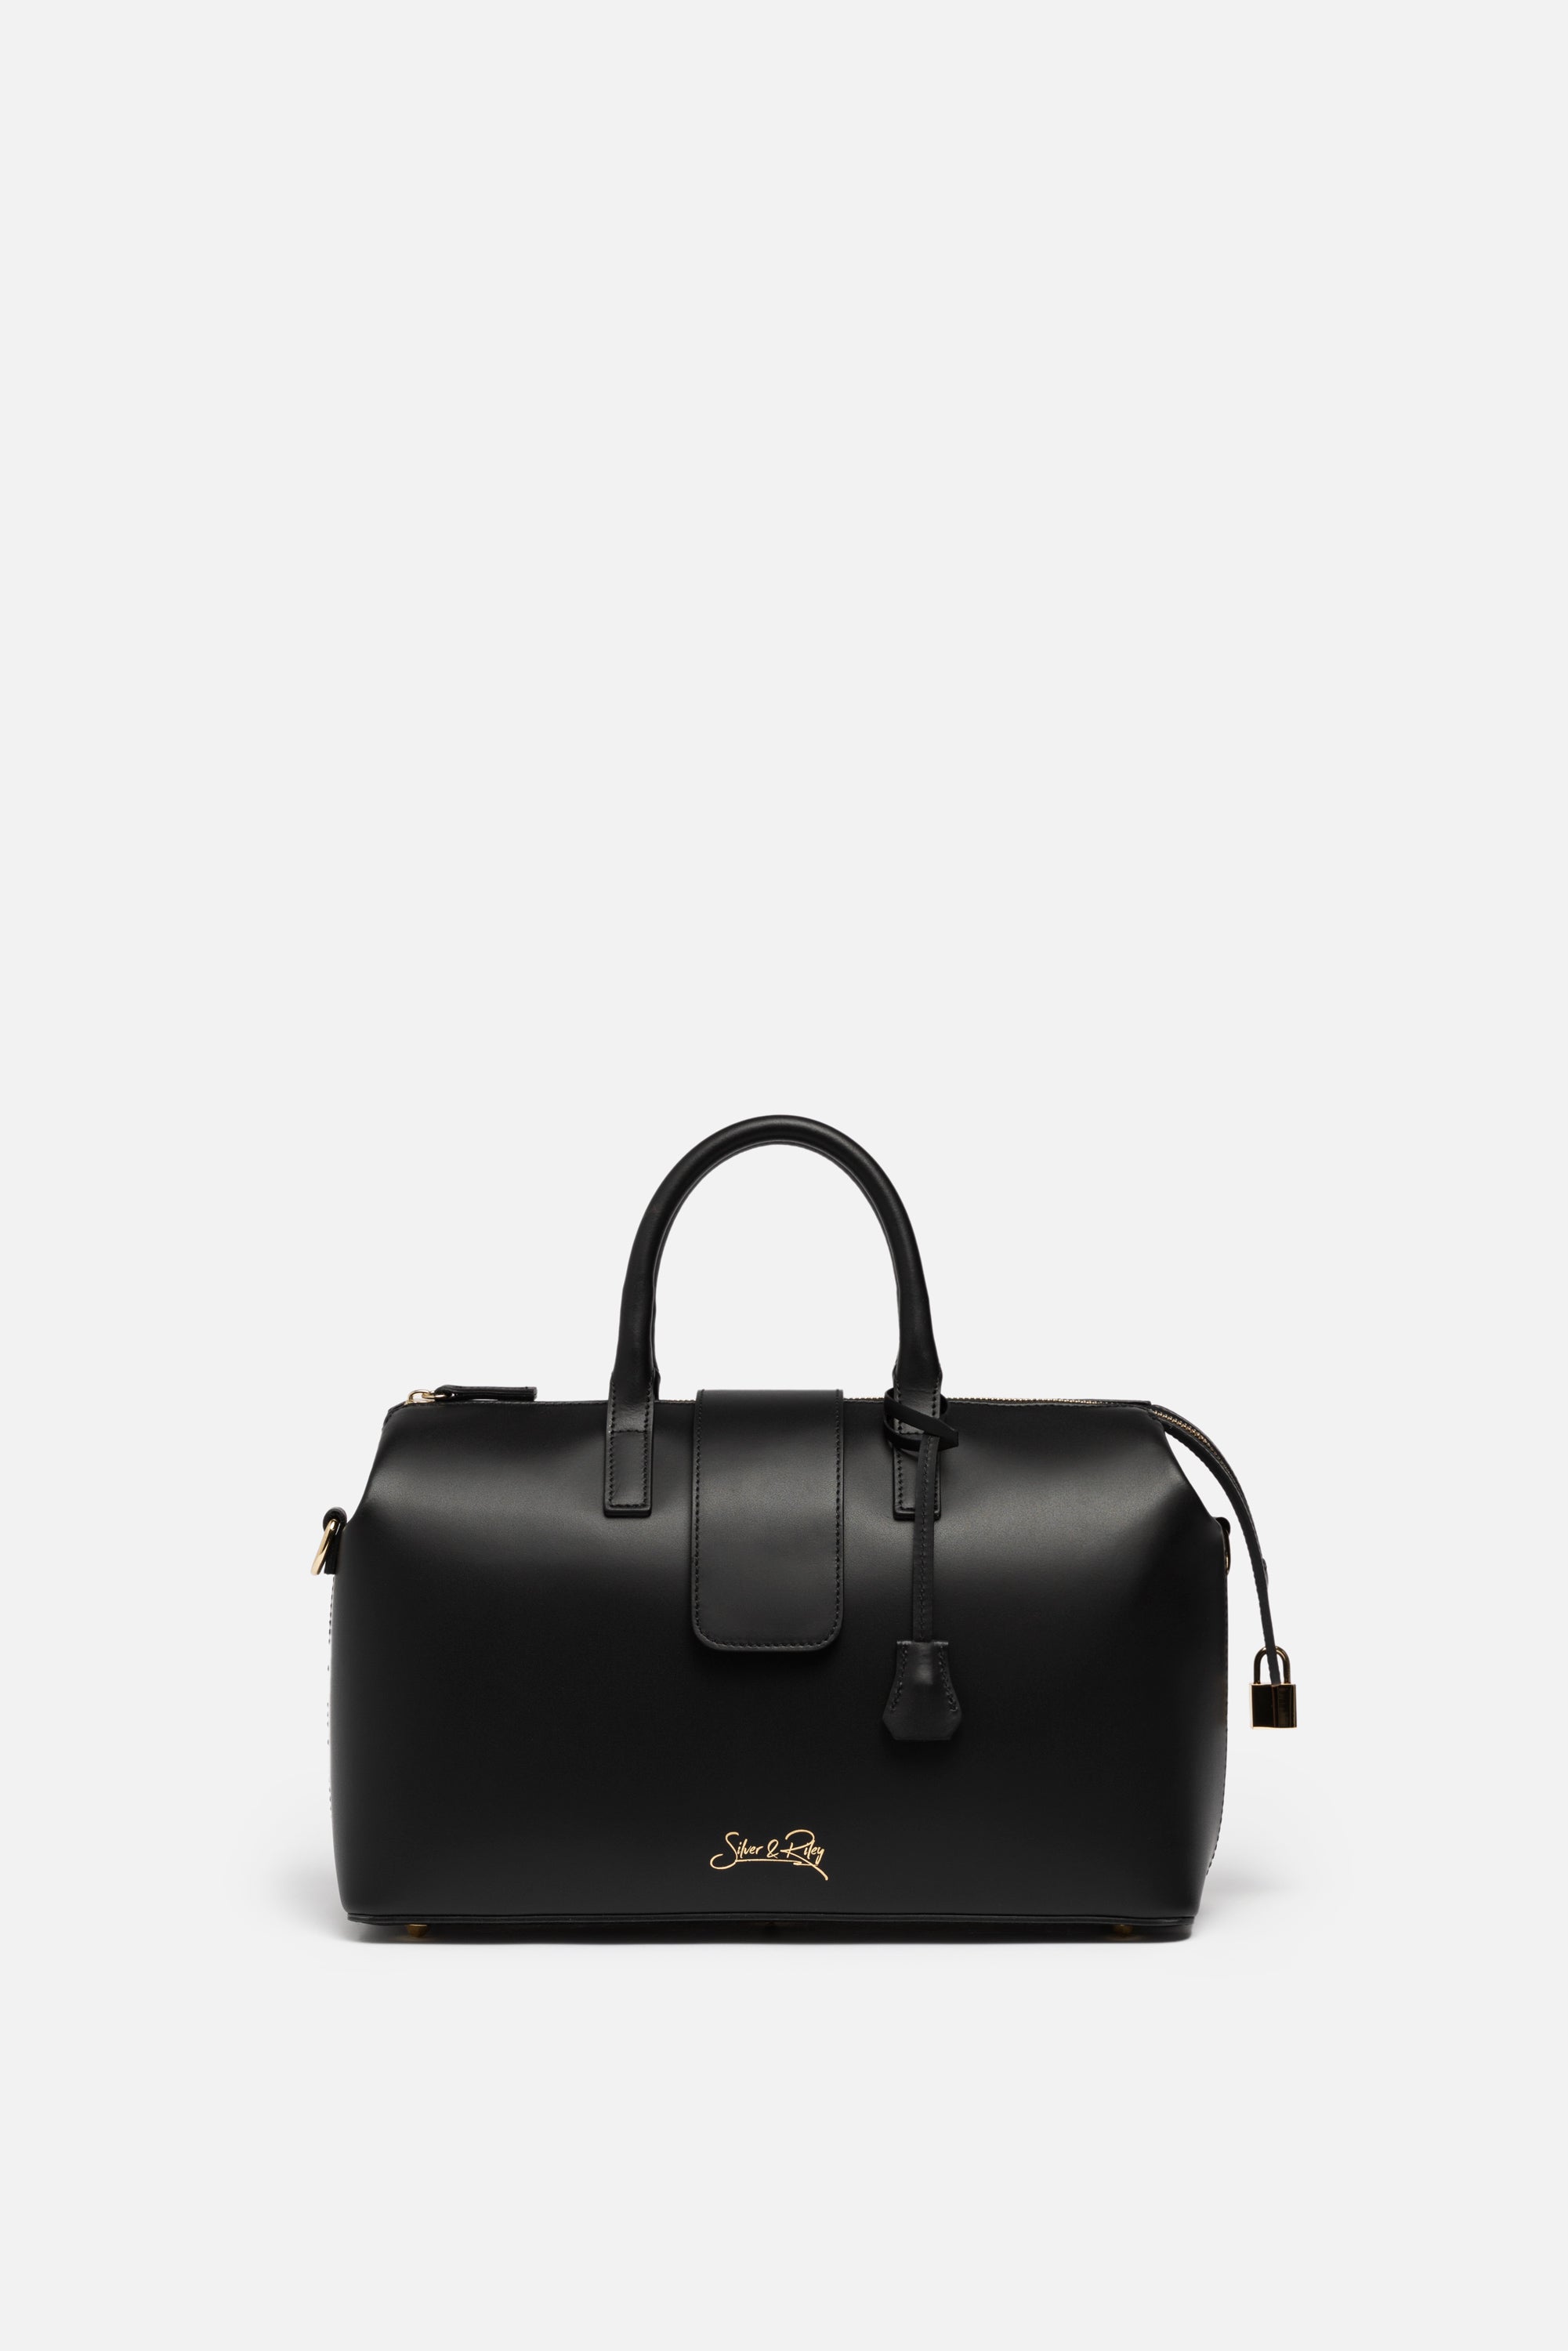 Calvin Klein handbag straps - Leather - Care And Repair